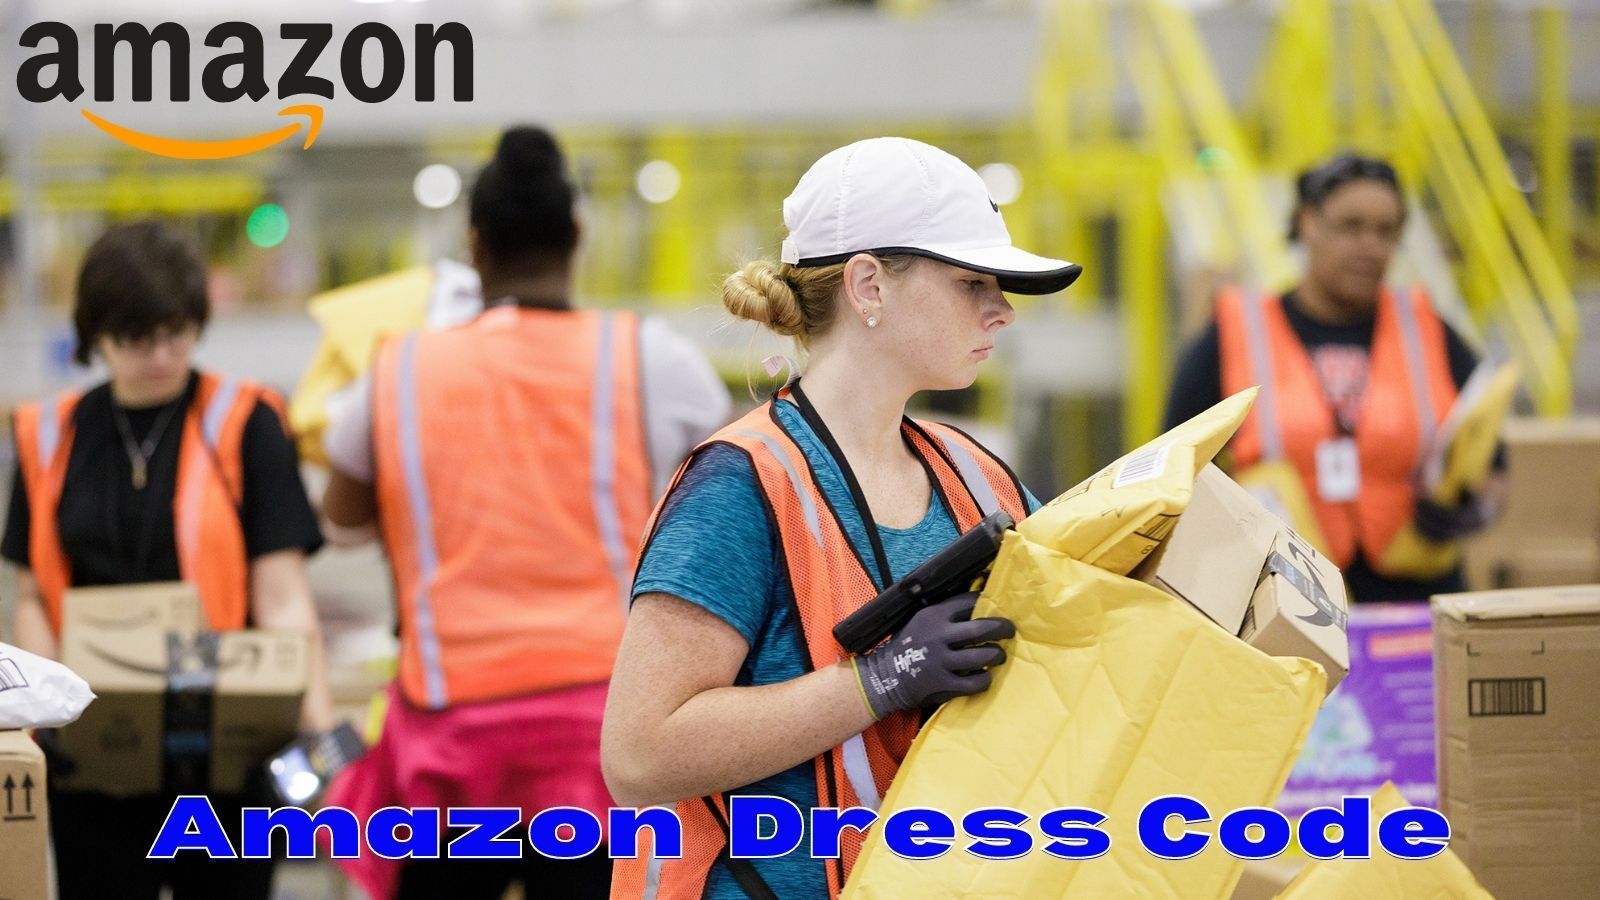 Amazon Dress Code - Cherry Picks